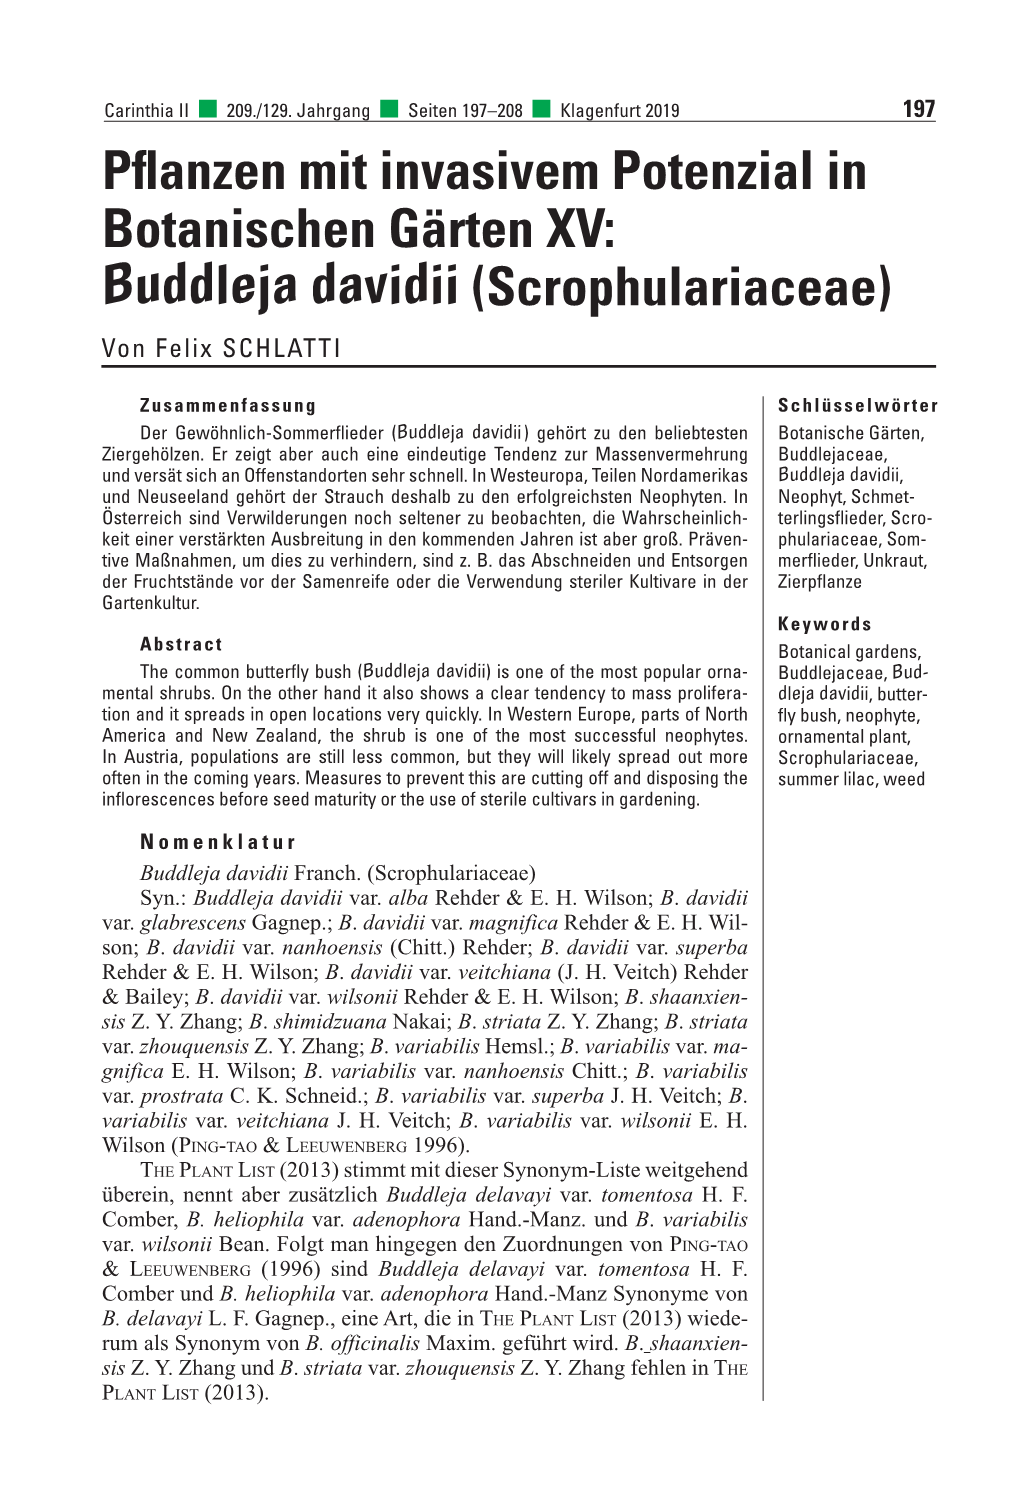 Buddleja Davidii (Scrophulariaceae) Von Felix SCHLATTI